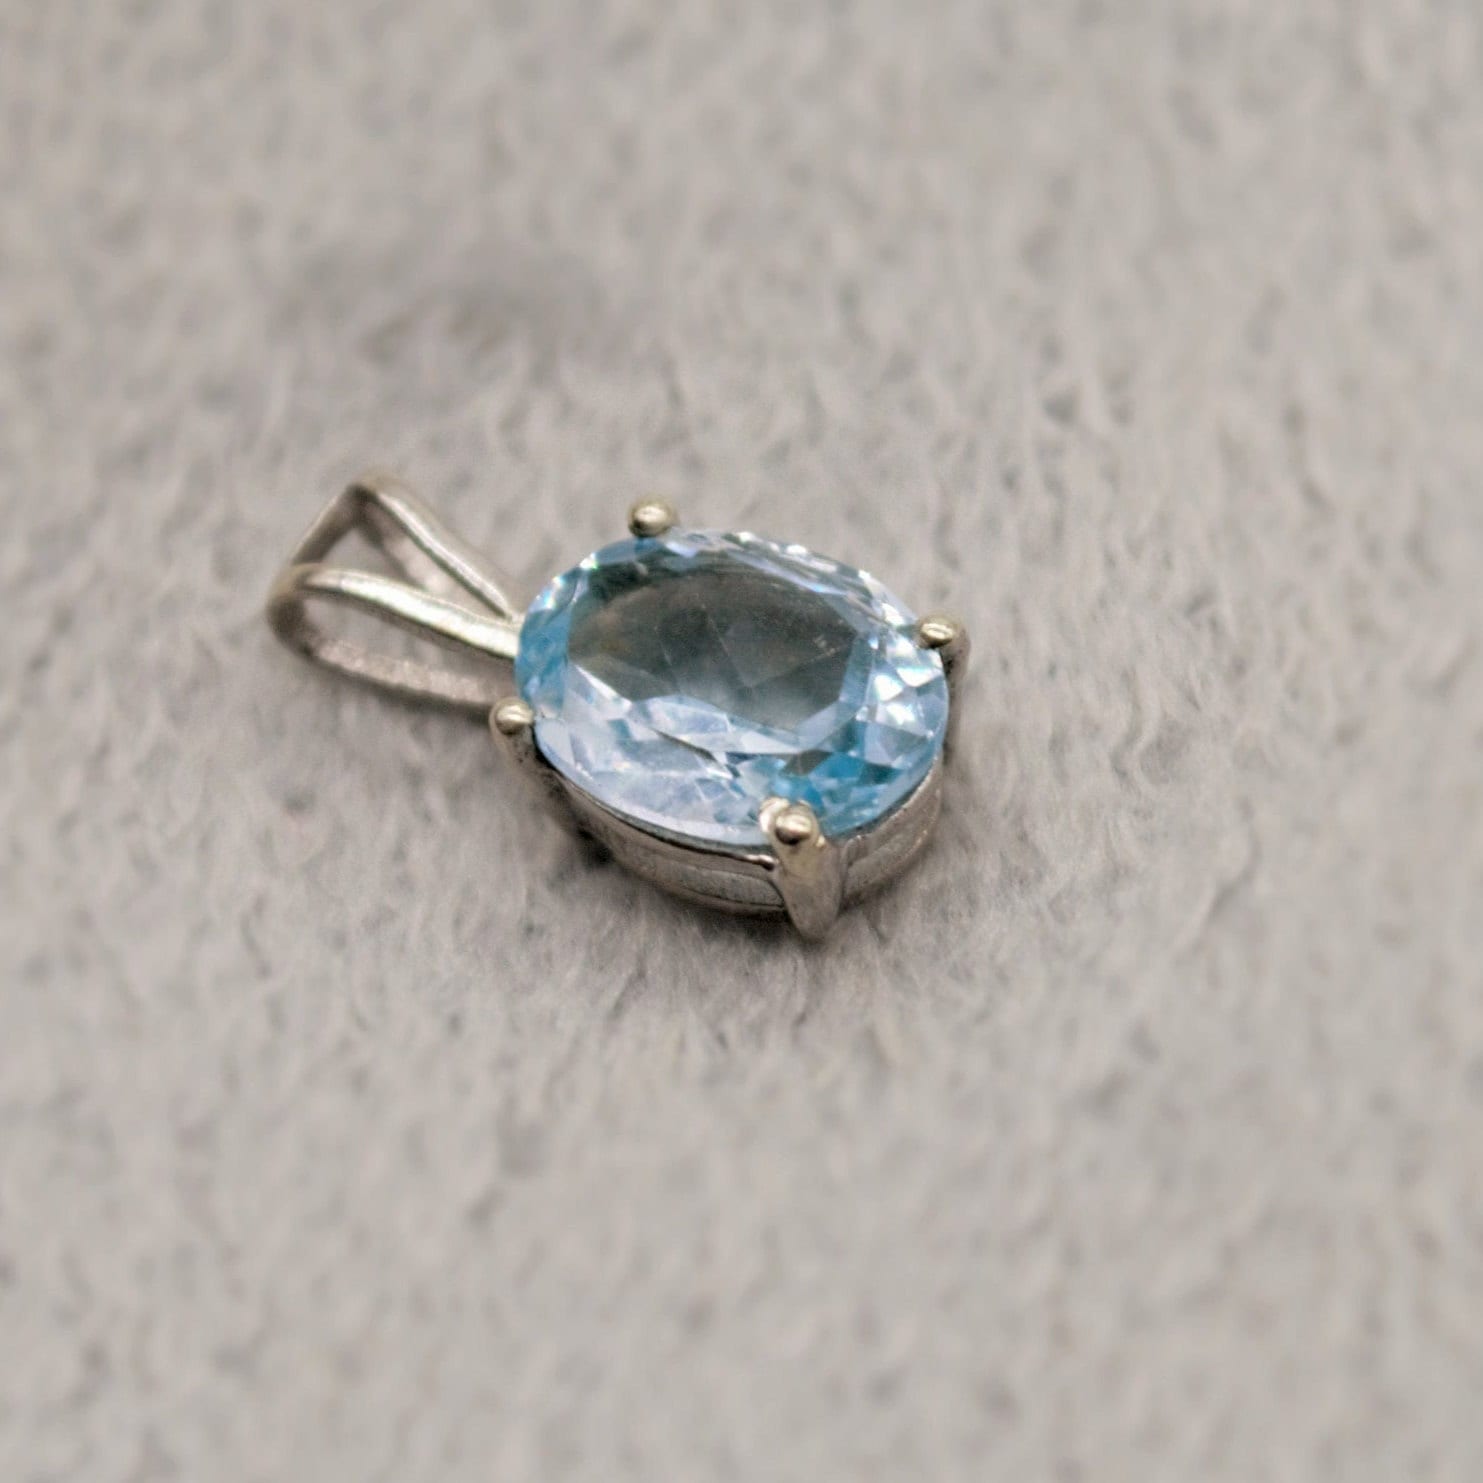 Blue Topaz Pendant Necklace, Dainty Sterling Silver November Birthstone Pendant